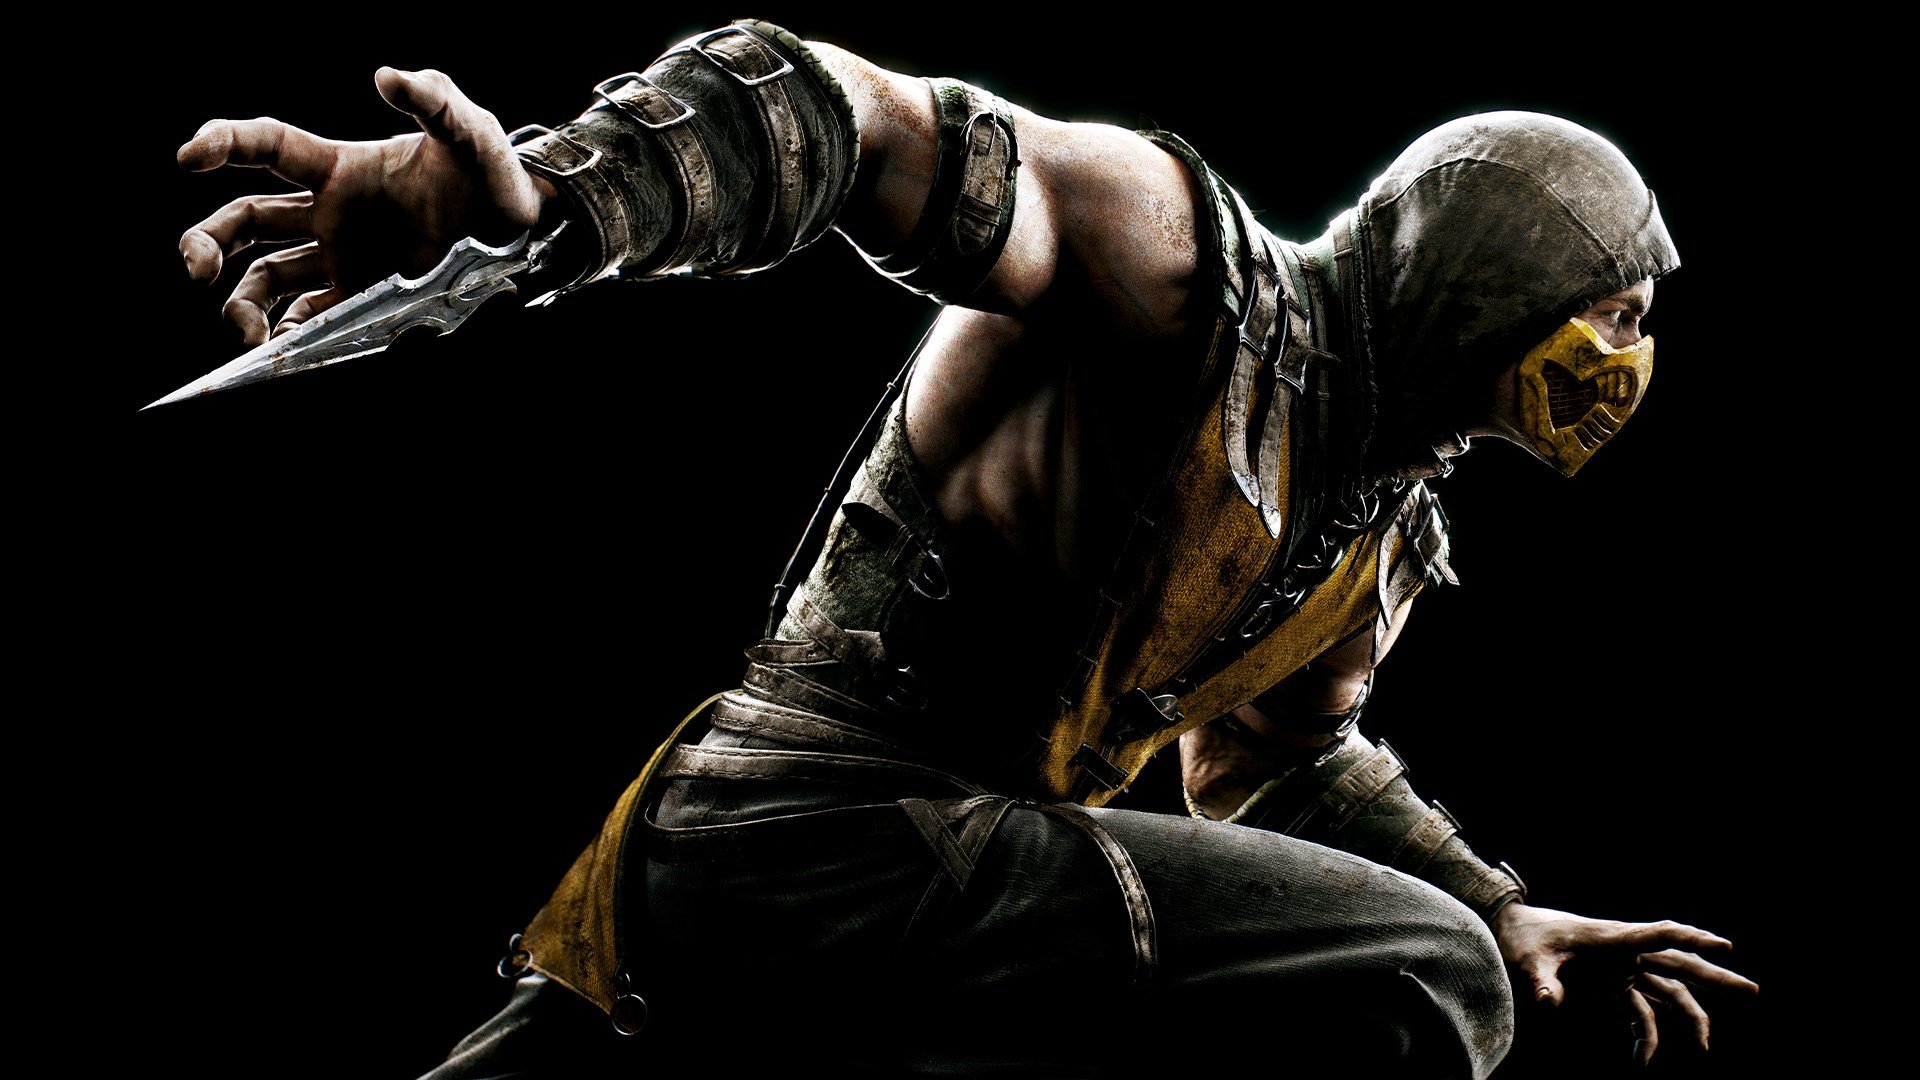 Mortal Kombat X cover image